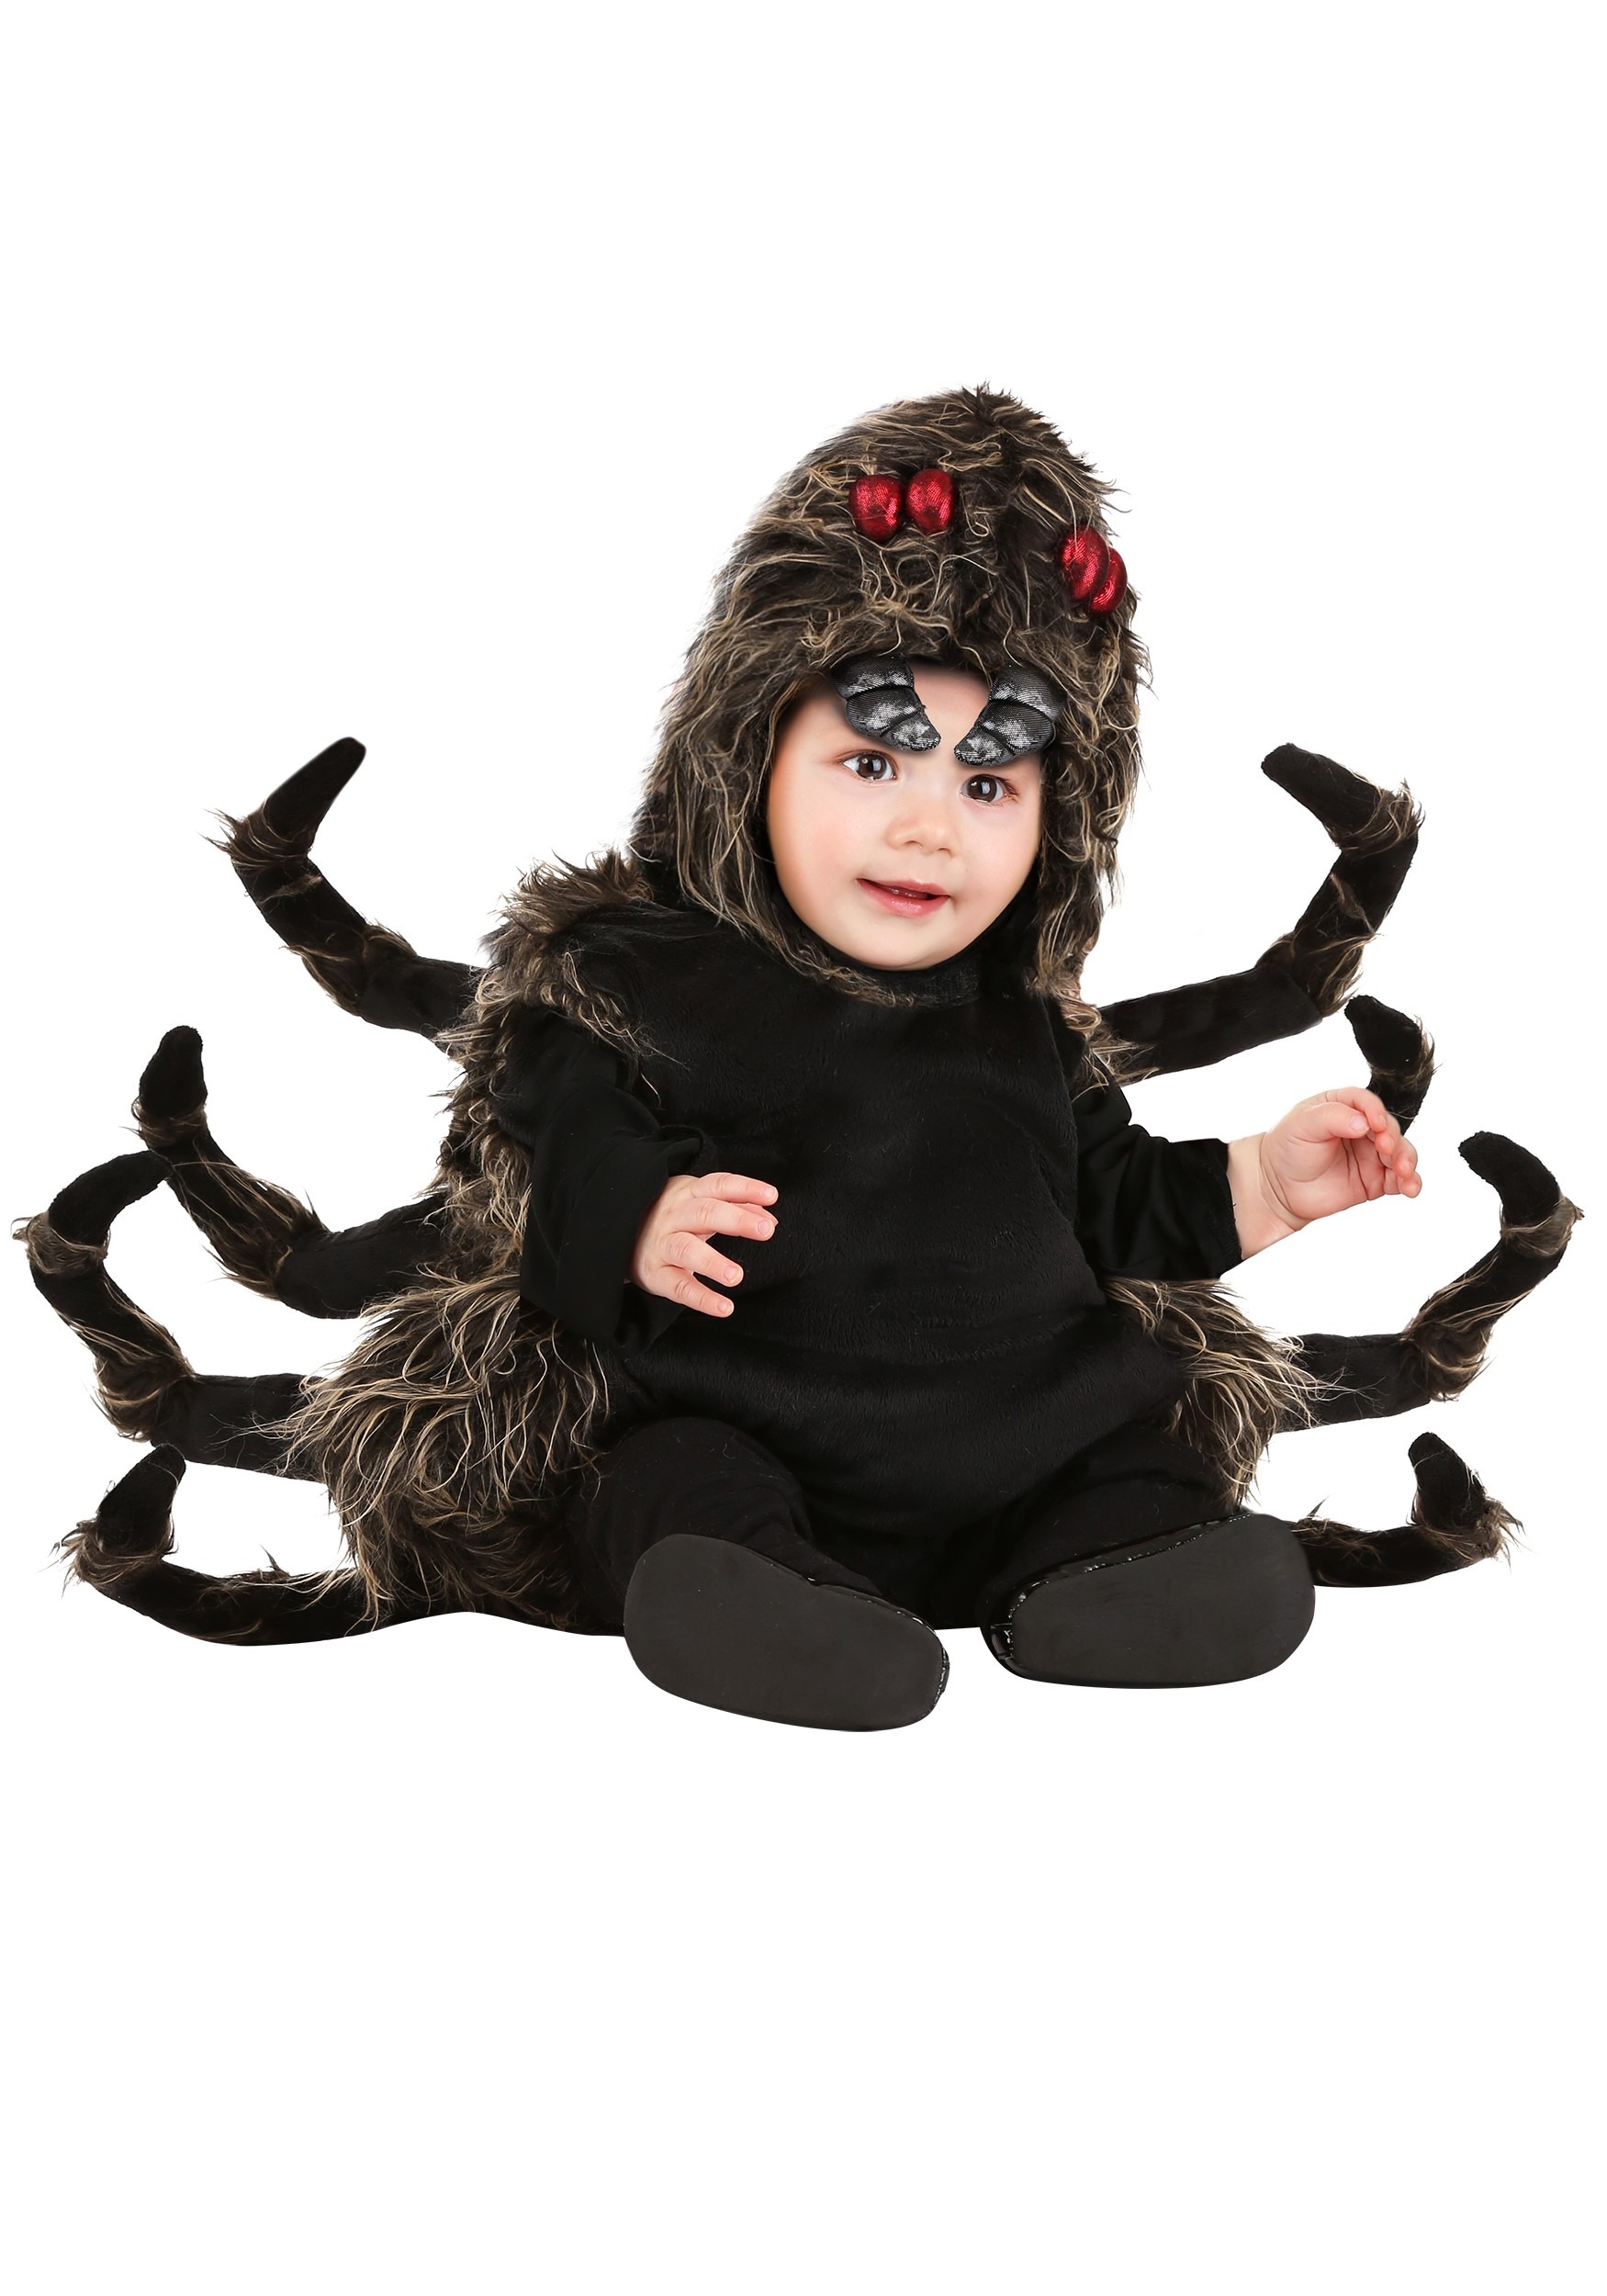 Infant Talan the Tarantula Costume